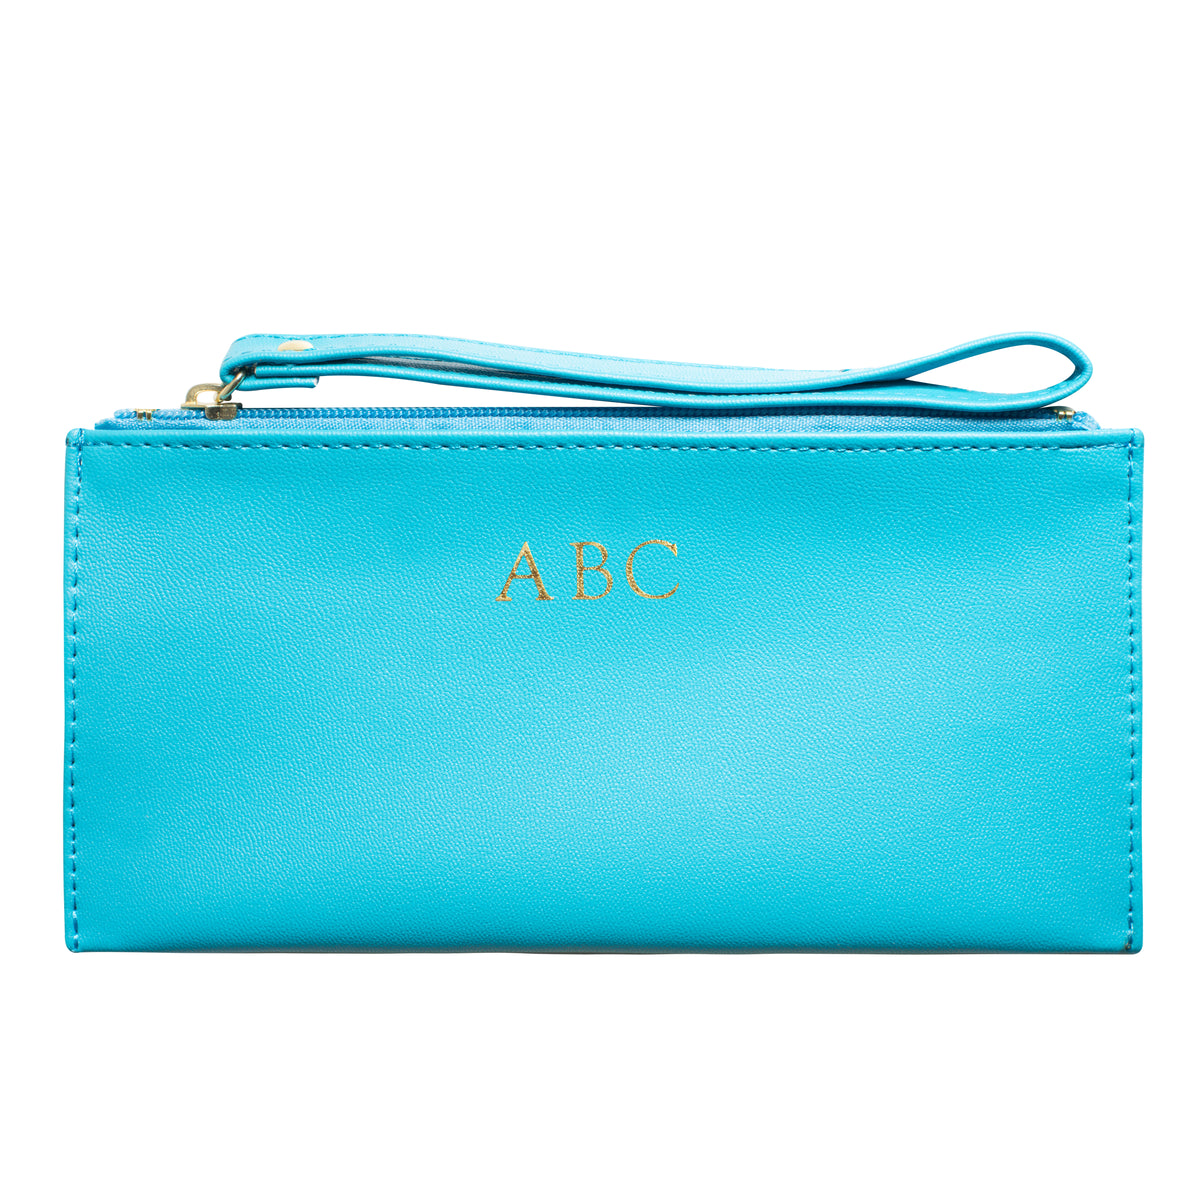 Turquoise Wristlet Bag